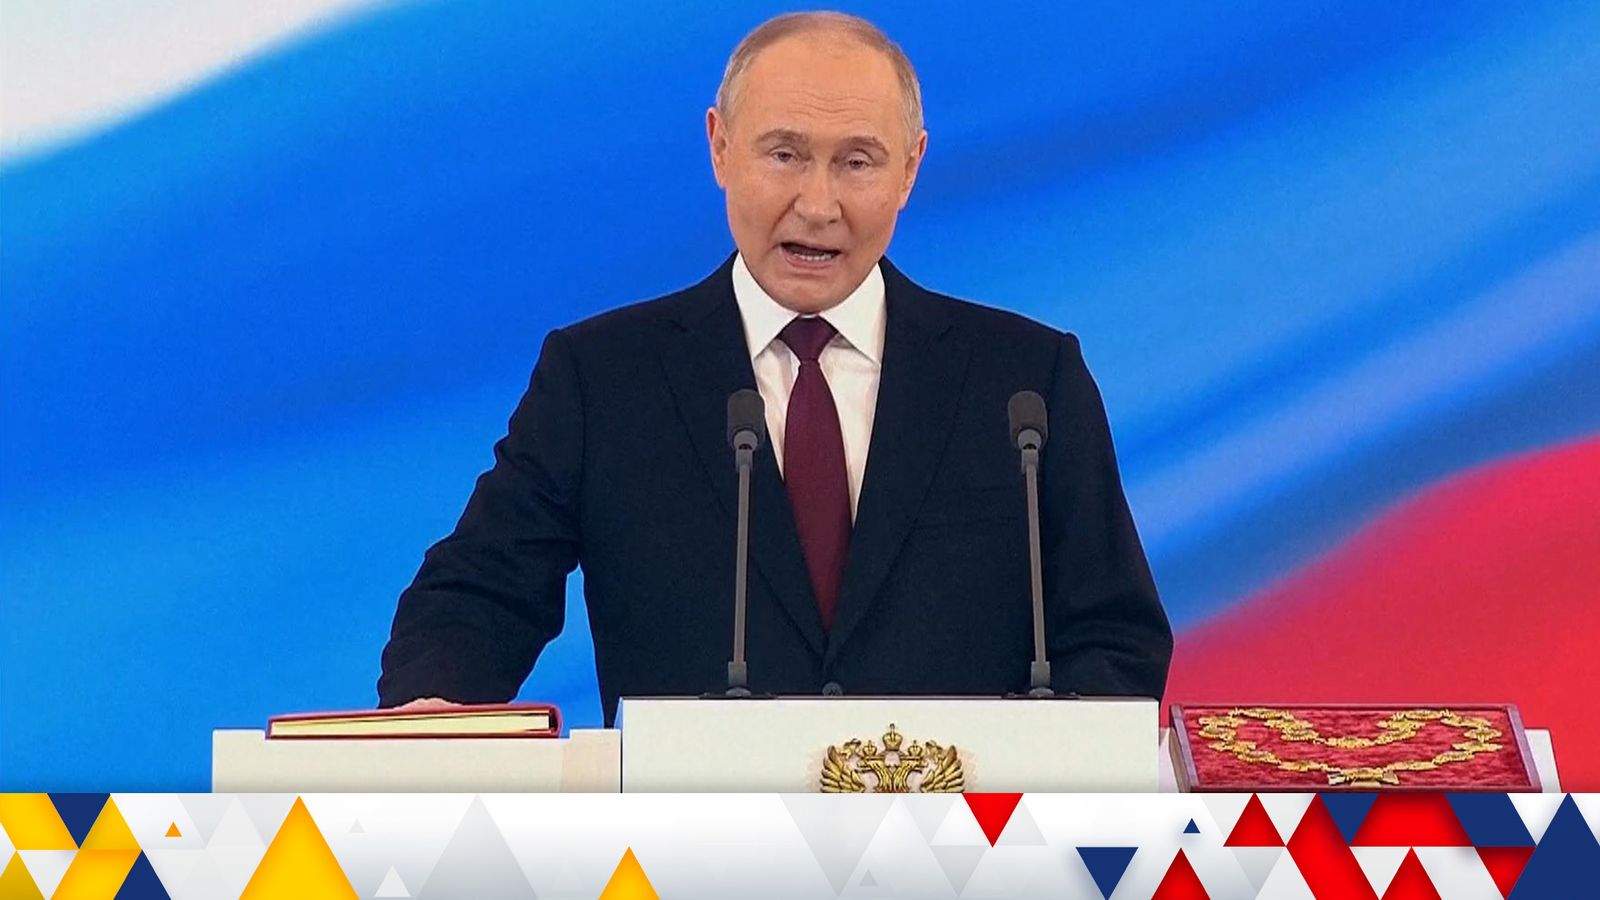 Latest Developments in Ukraine-Russia War: Putin’s Inauguration Speech Raises Concerns in the West; Assassination Plot foiled against Zelenskyy | Global News